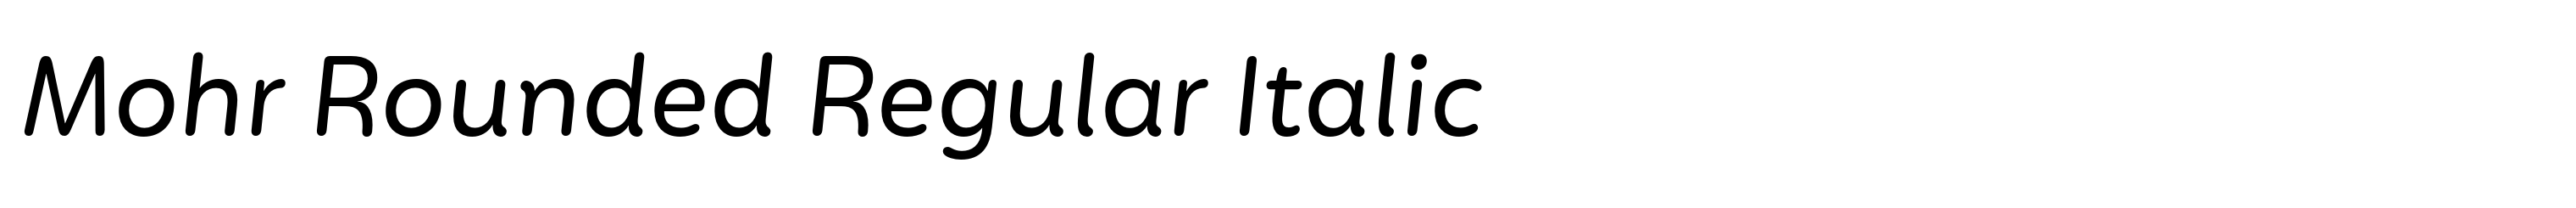 Mohr Rounded Regular Italic